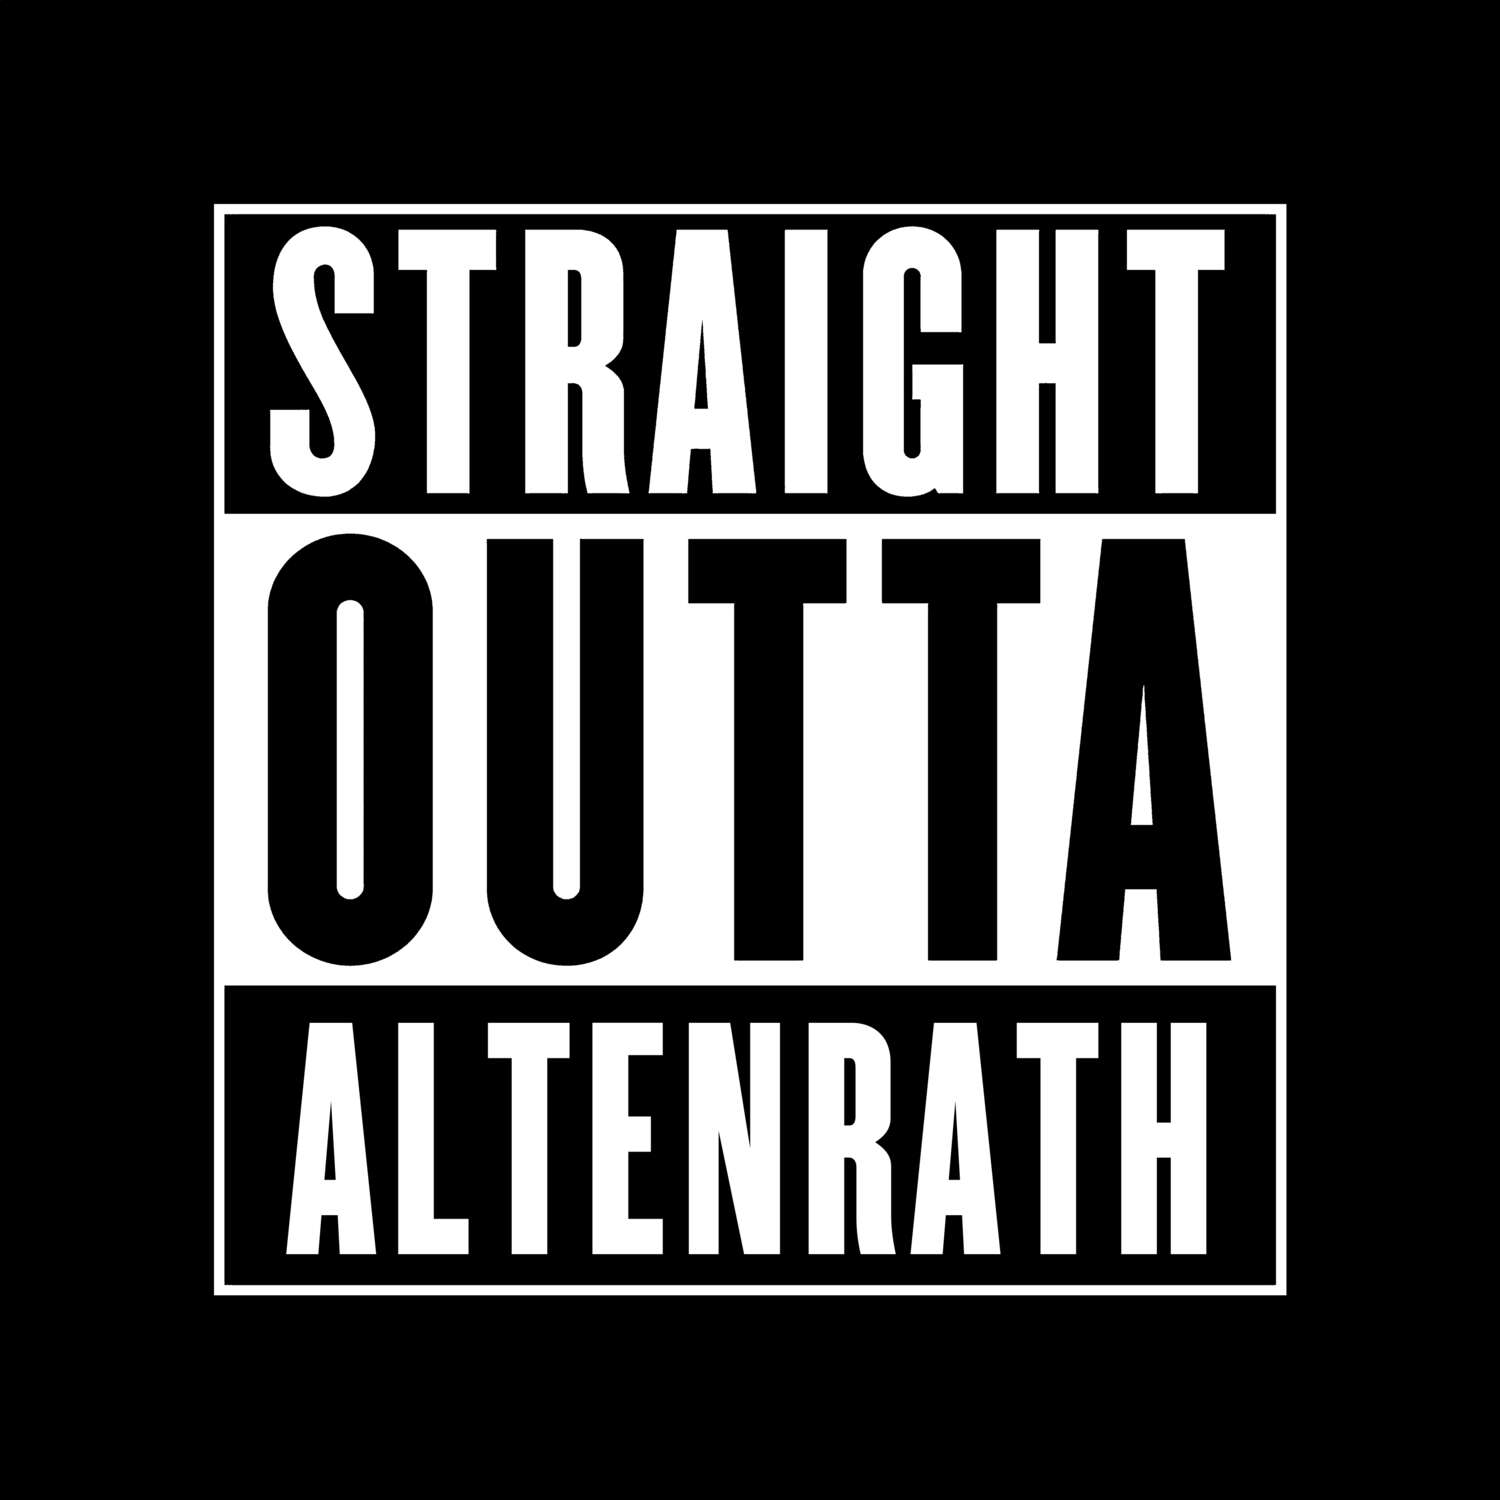 Altenrath T-Shirt »Straight Outta«